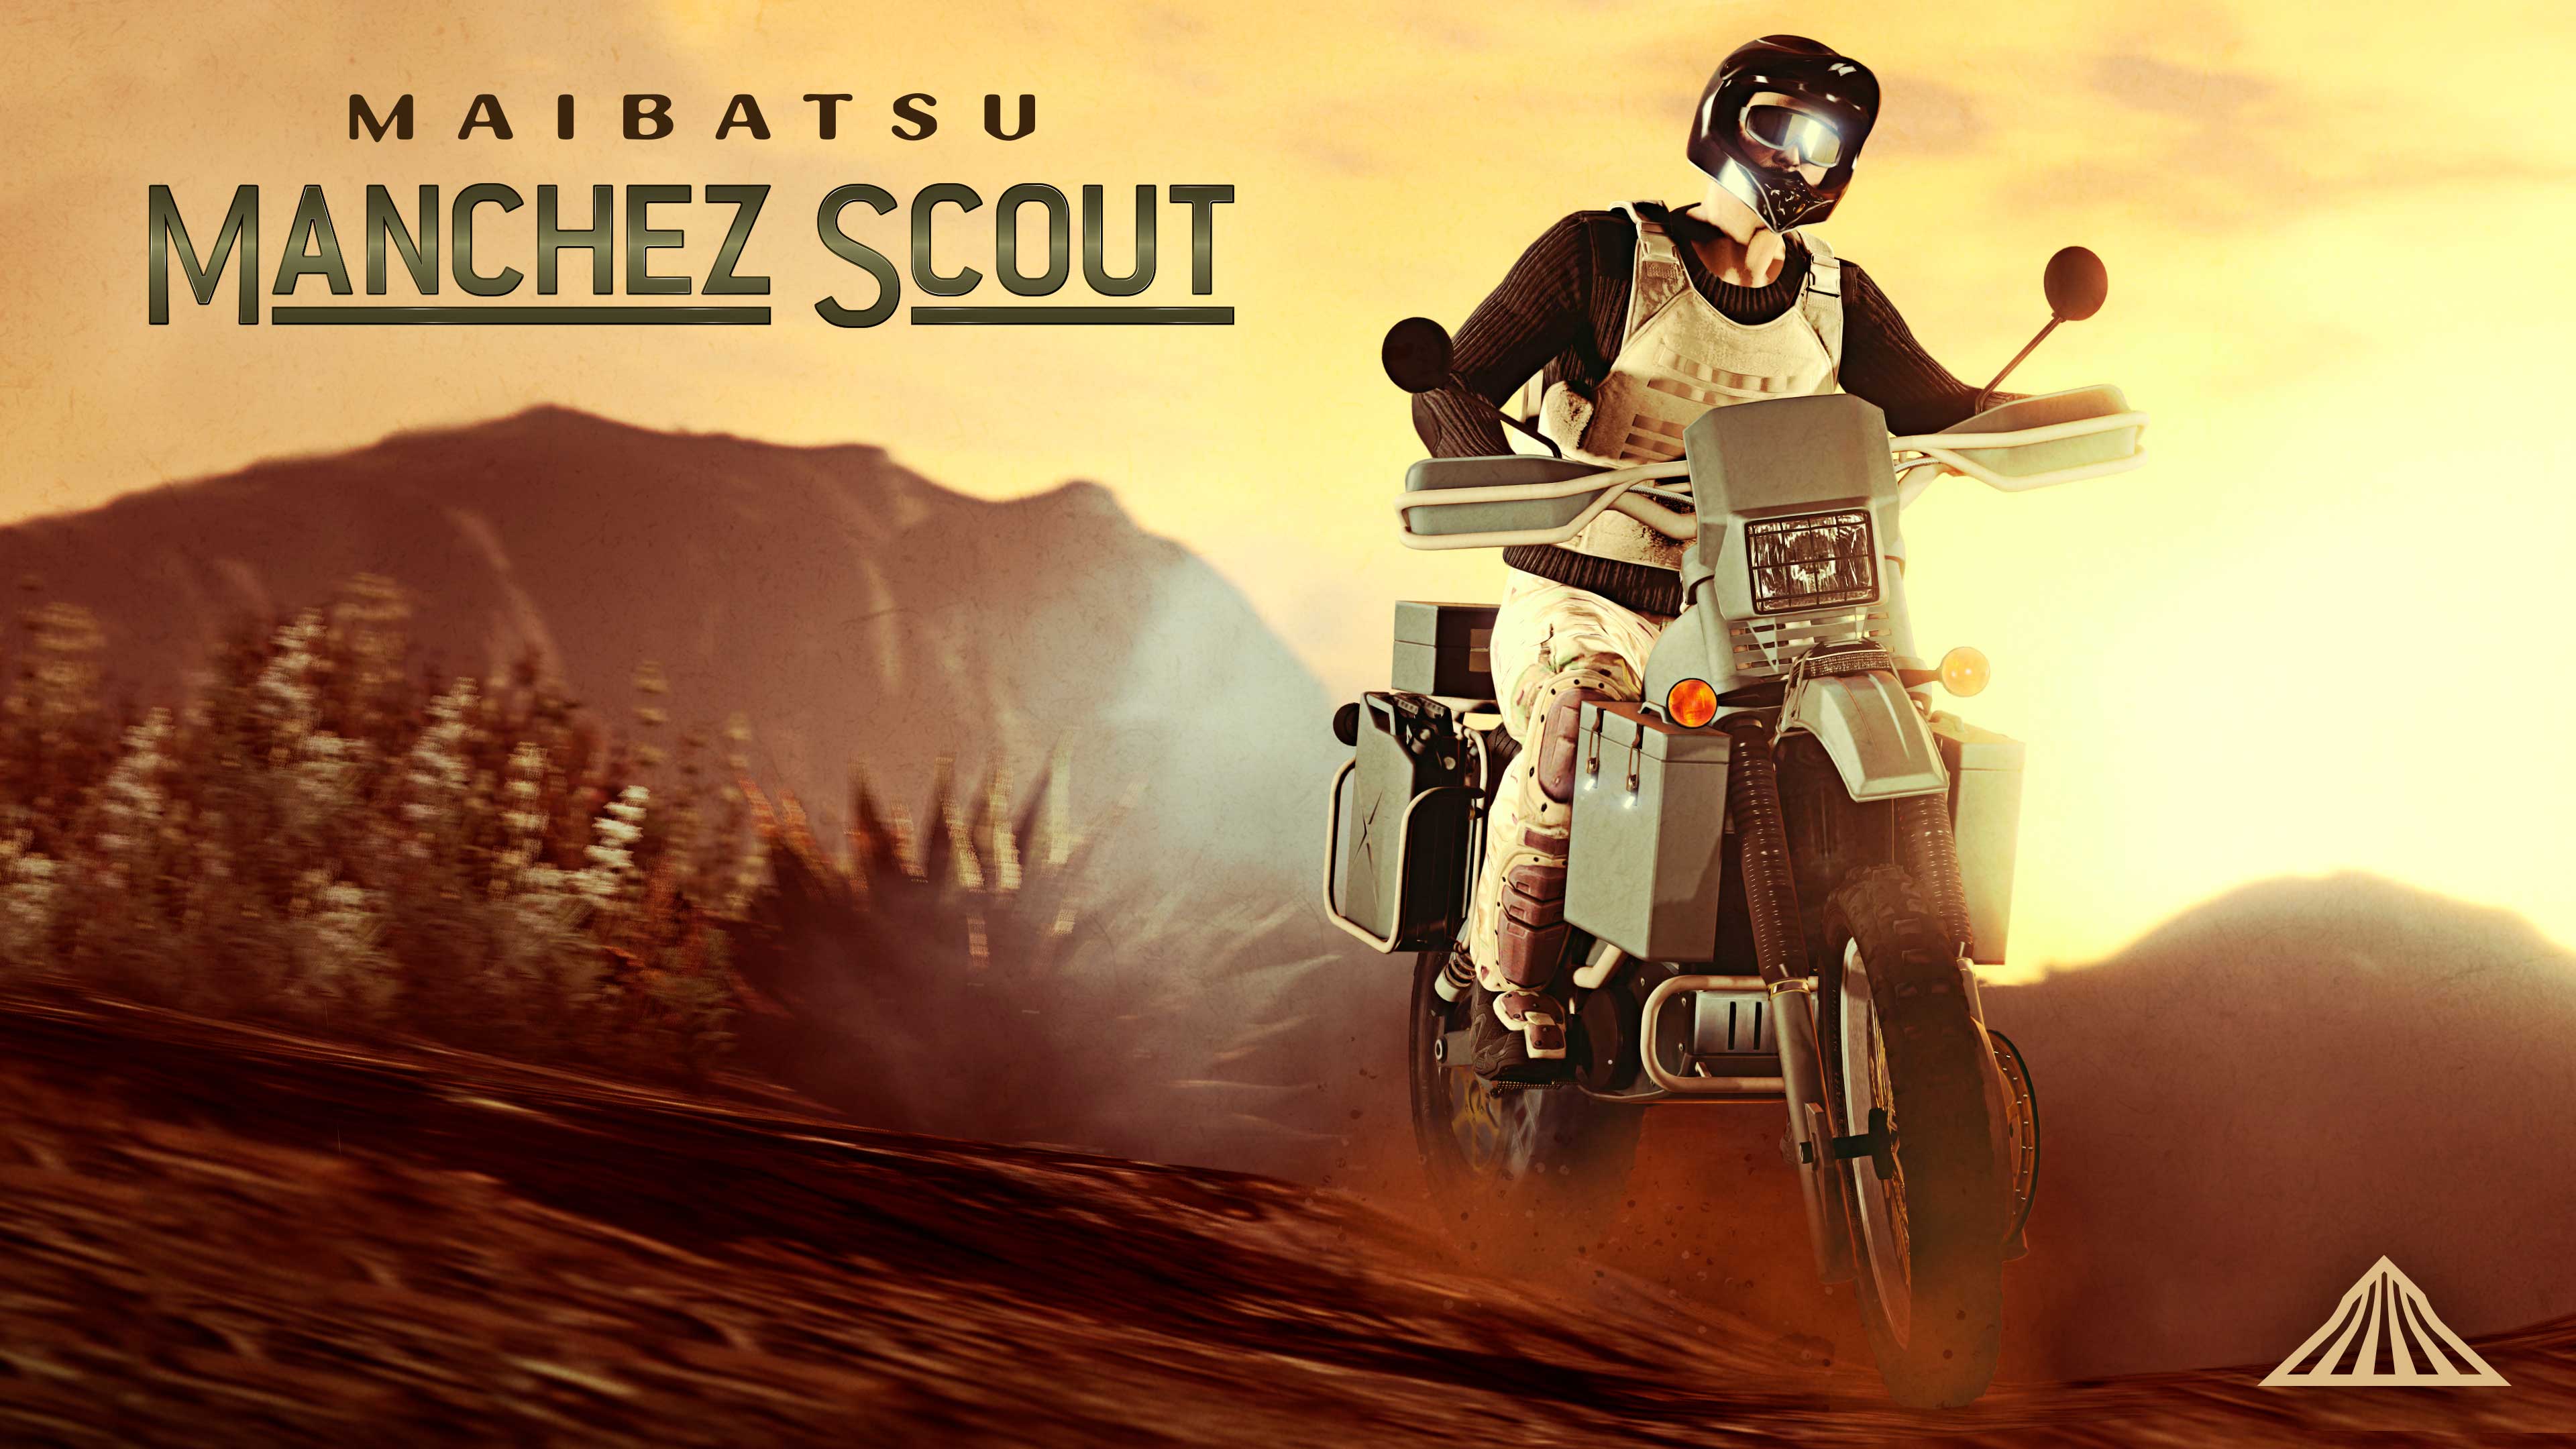 More information about "Nieuw op GTA Online: de Maibatsu Manchez Scout"